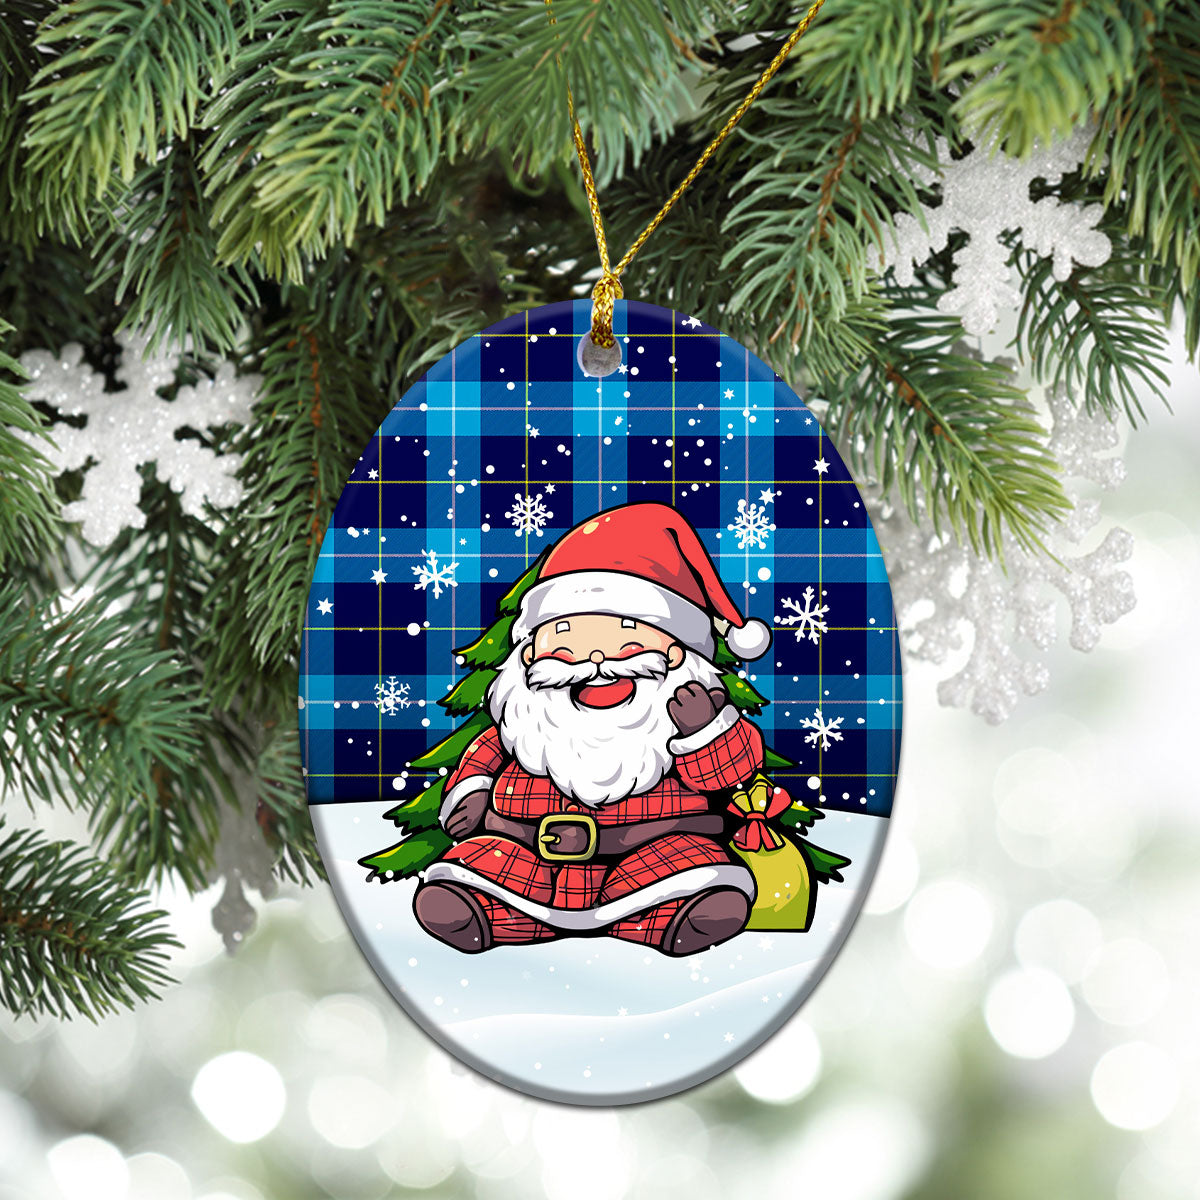 McKerrell Tartan Christmas Ceramic Ornament - Scottish Santa Style